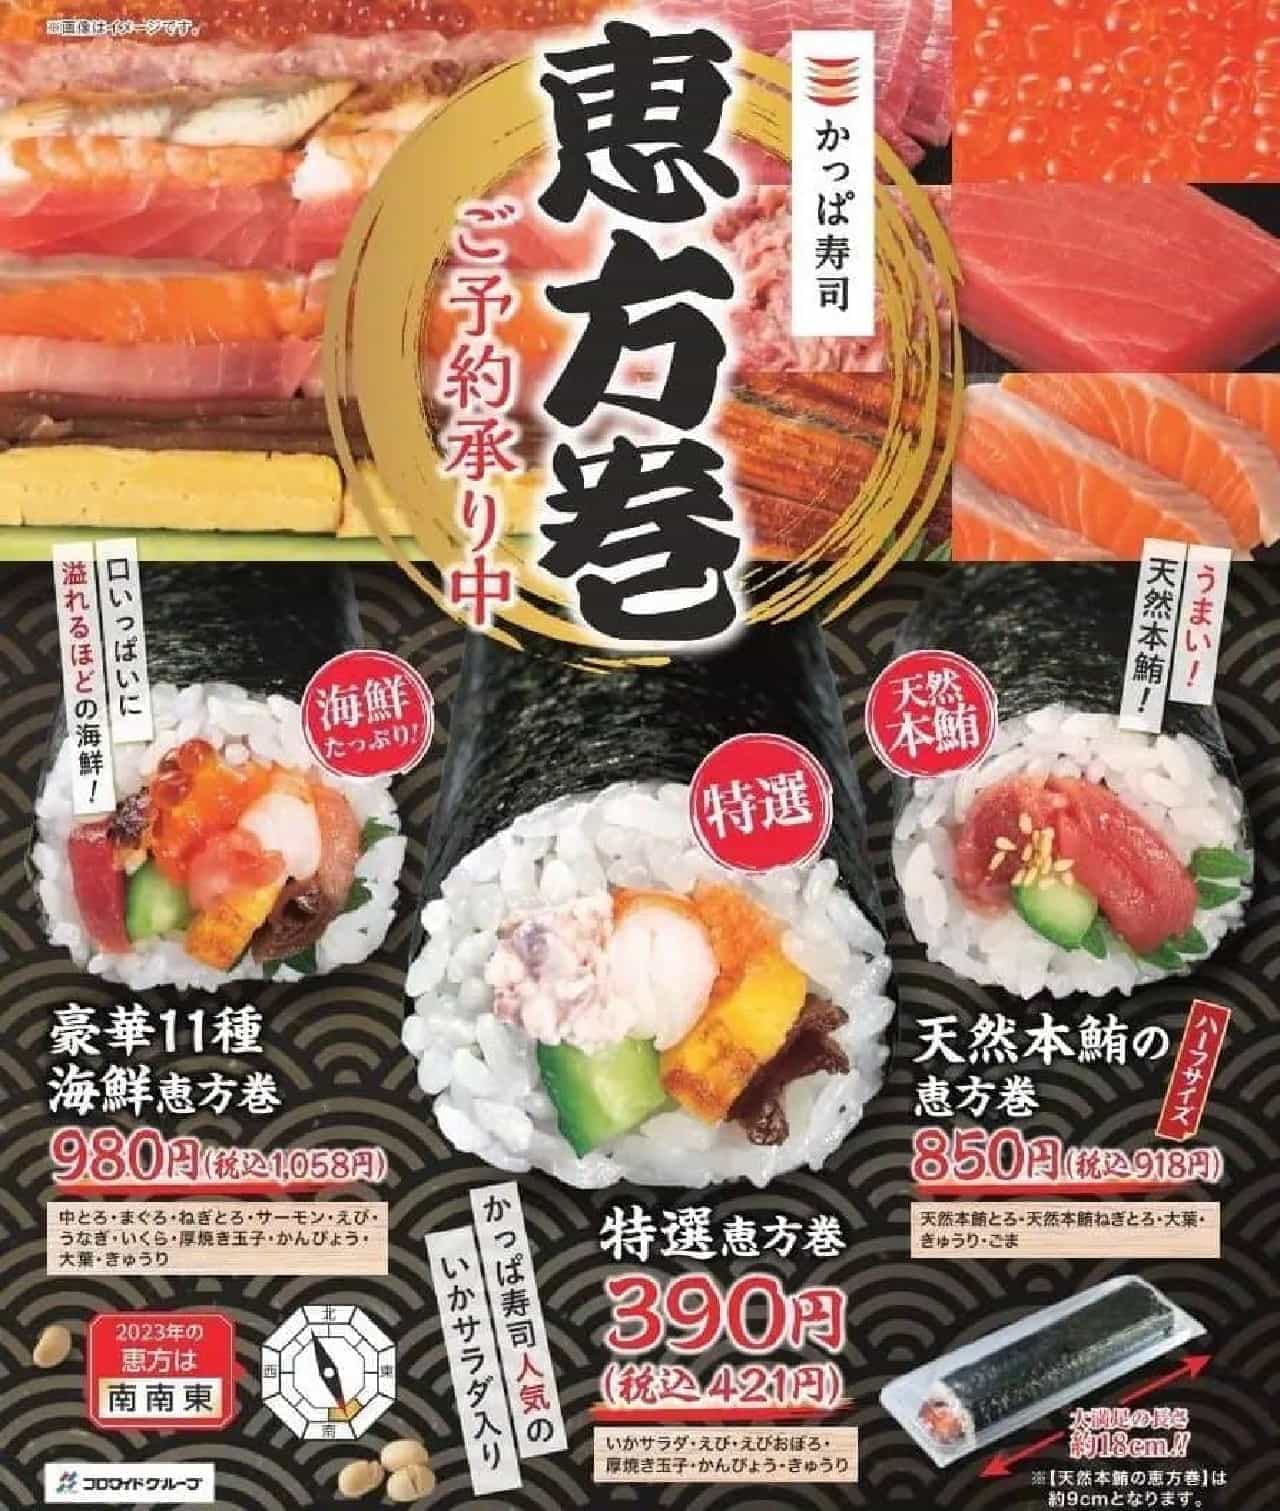 Kappa Sushi "Tokusen Ebomaki", "Gorgeous 11 Kinds of Seafood Ebomaki", "Natural Tuna Ebomaki".